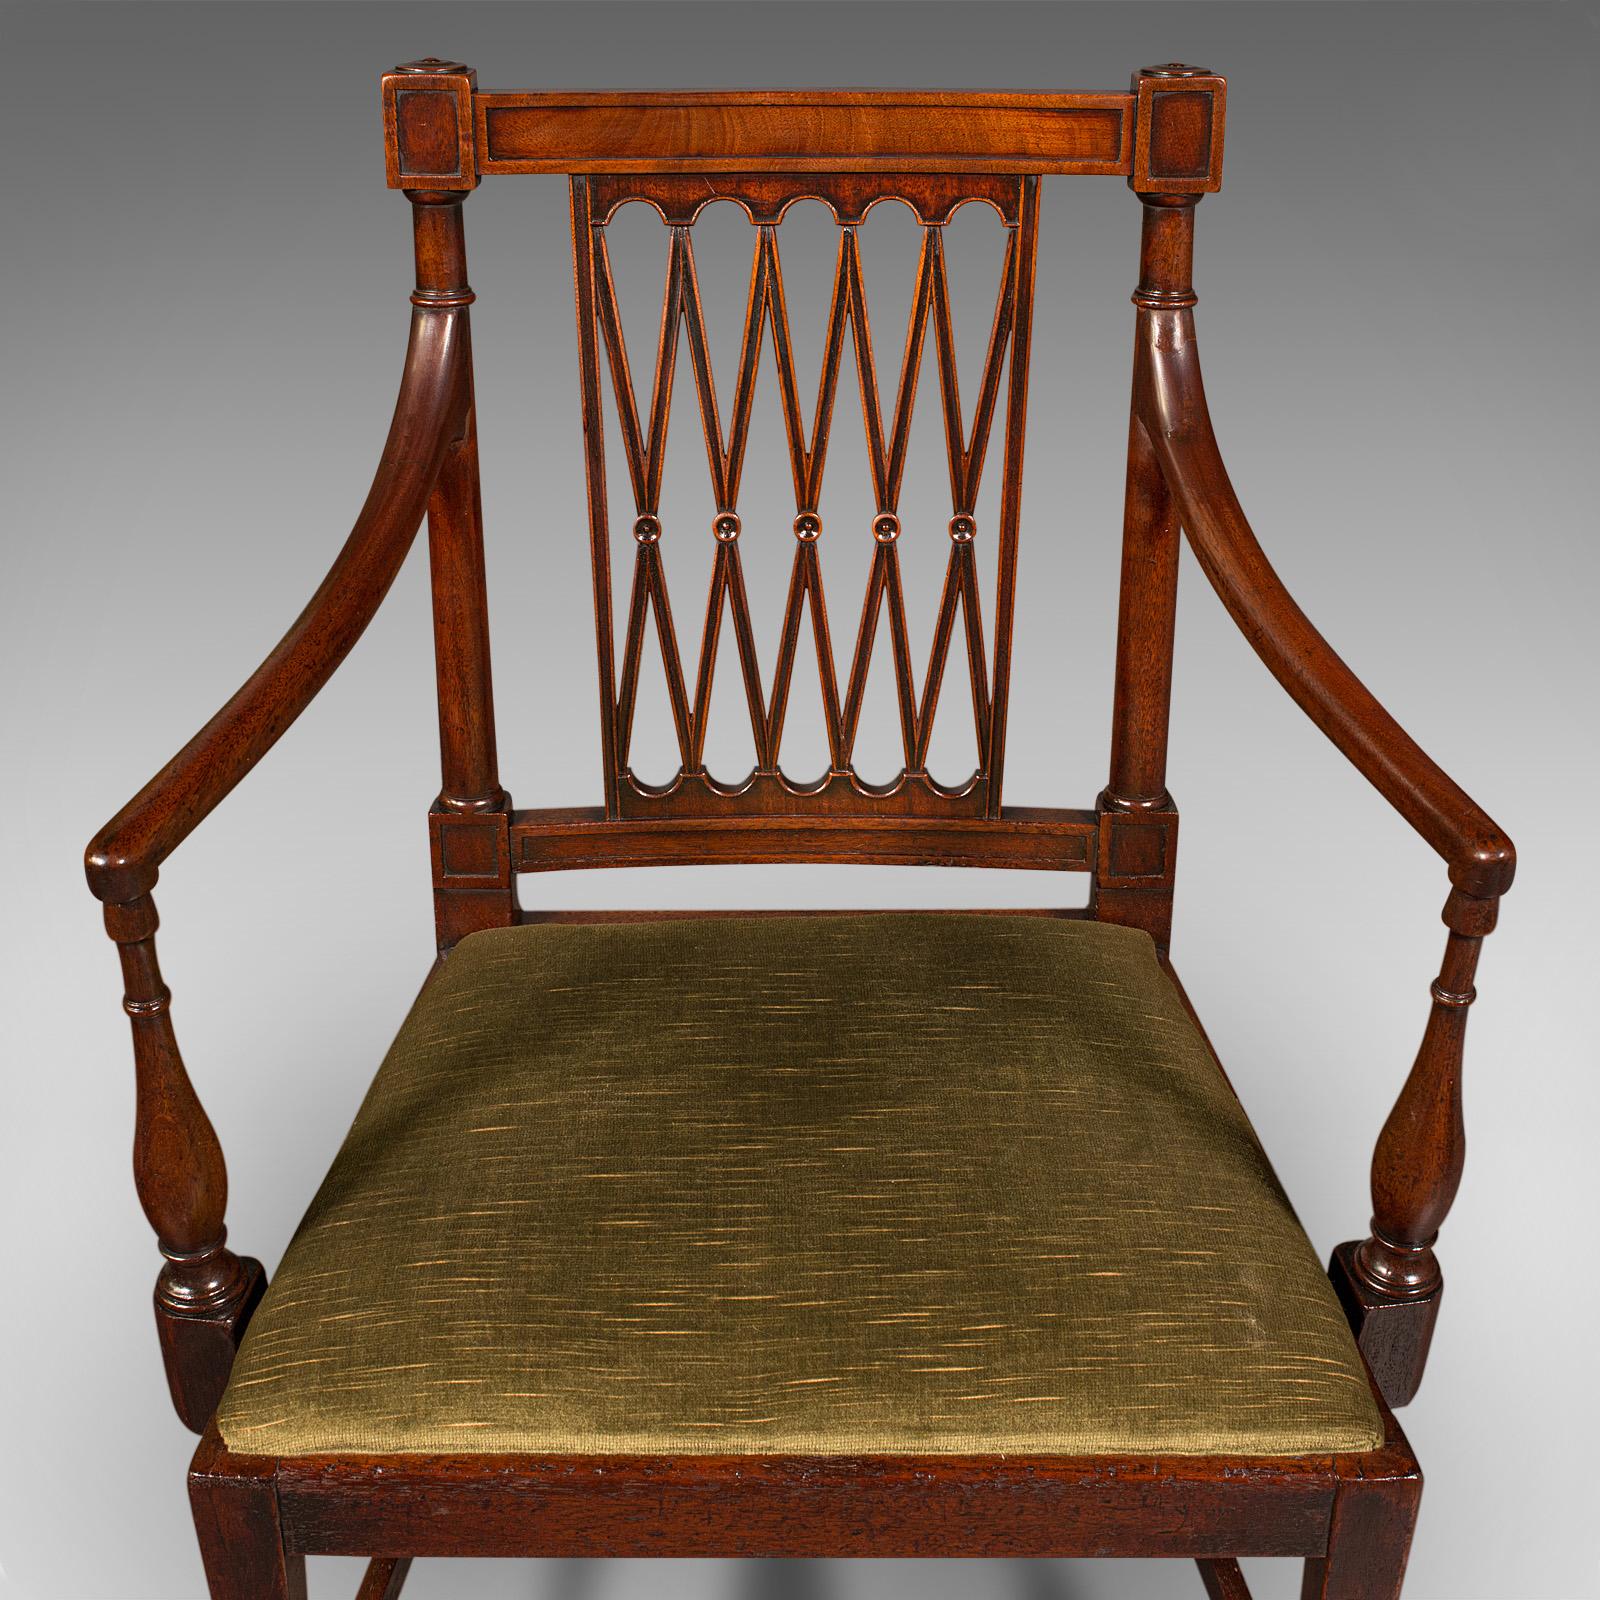 Wood Antique Elbow Chair, English, Carver Seat, After Sheraton, Georgian, Circa 1780